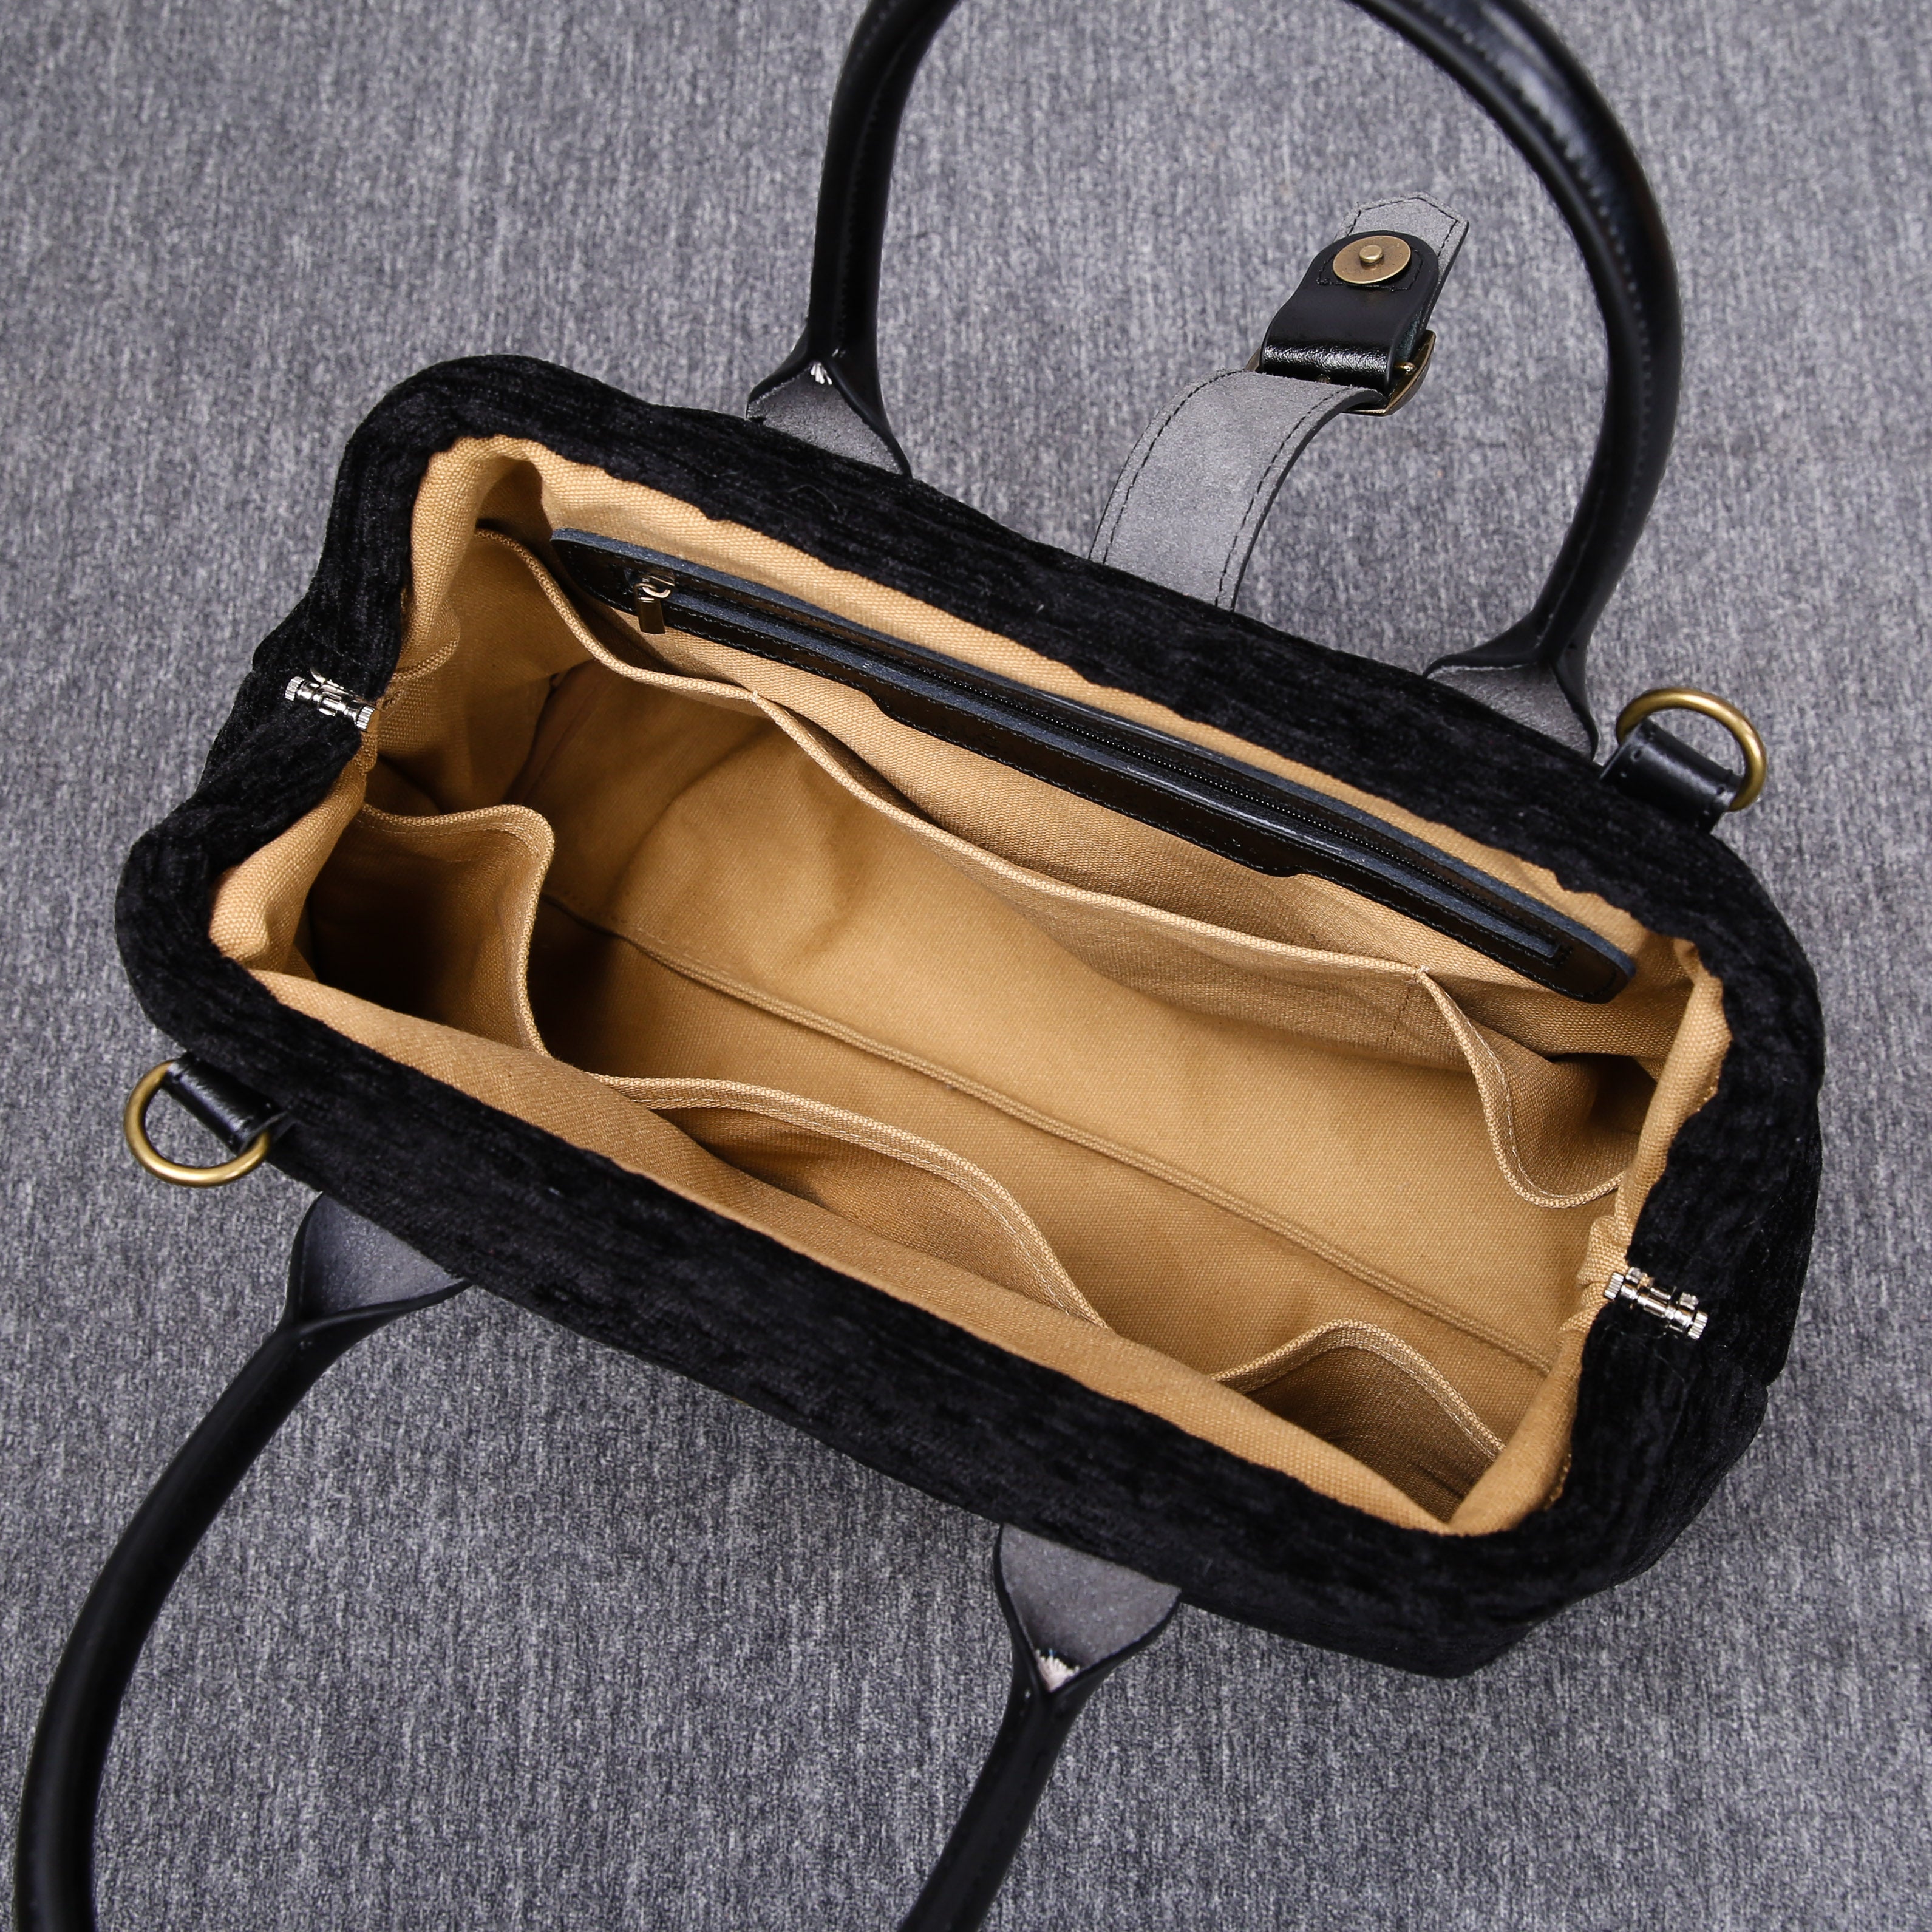 Luxury Monogrammed Black Purses carpet bag MCW Handmade